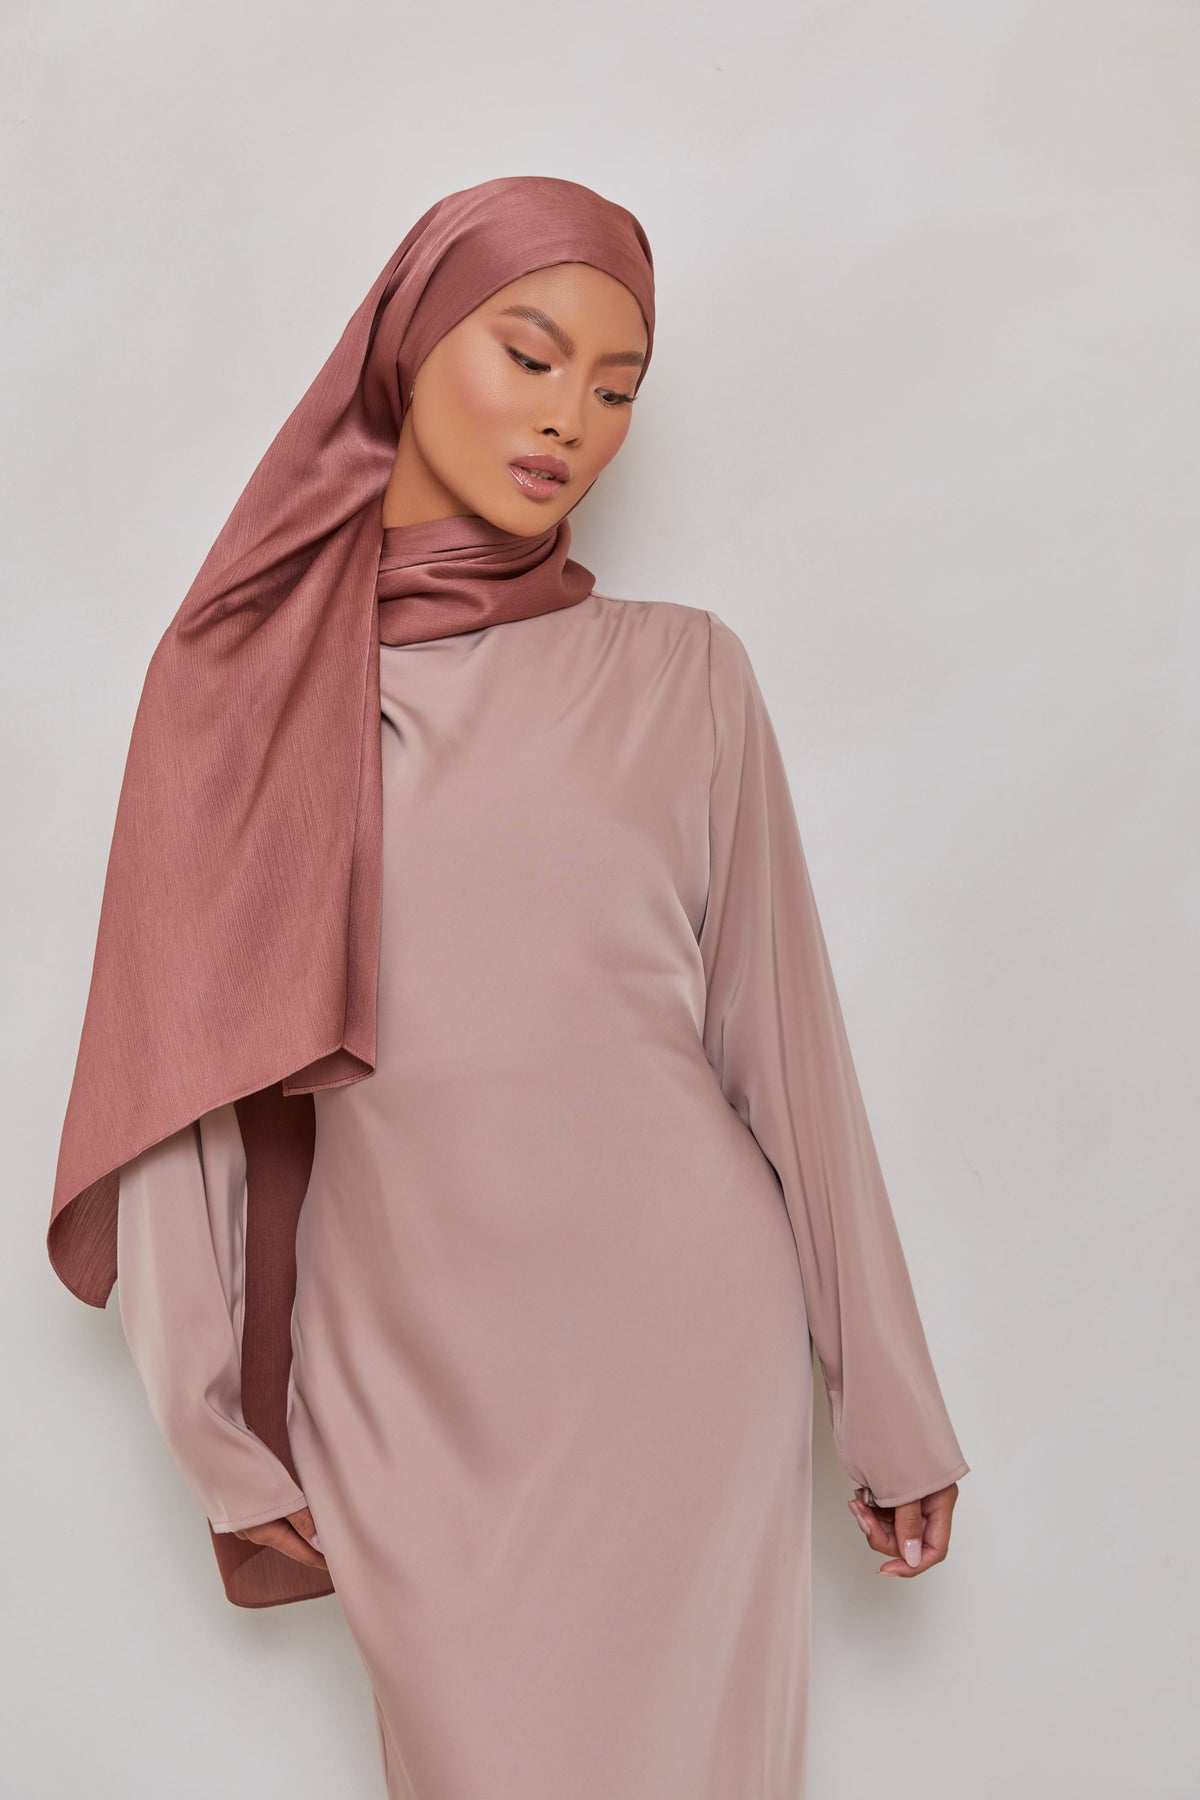 TEXTURE Satin Crepe Hijab - Dark Mauve Crepe Veiled Collection 